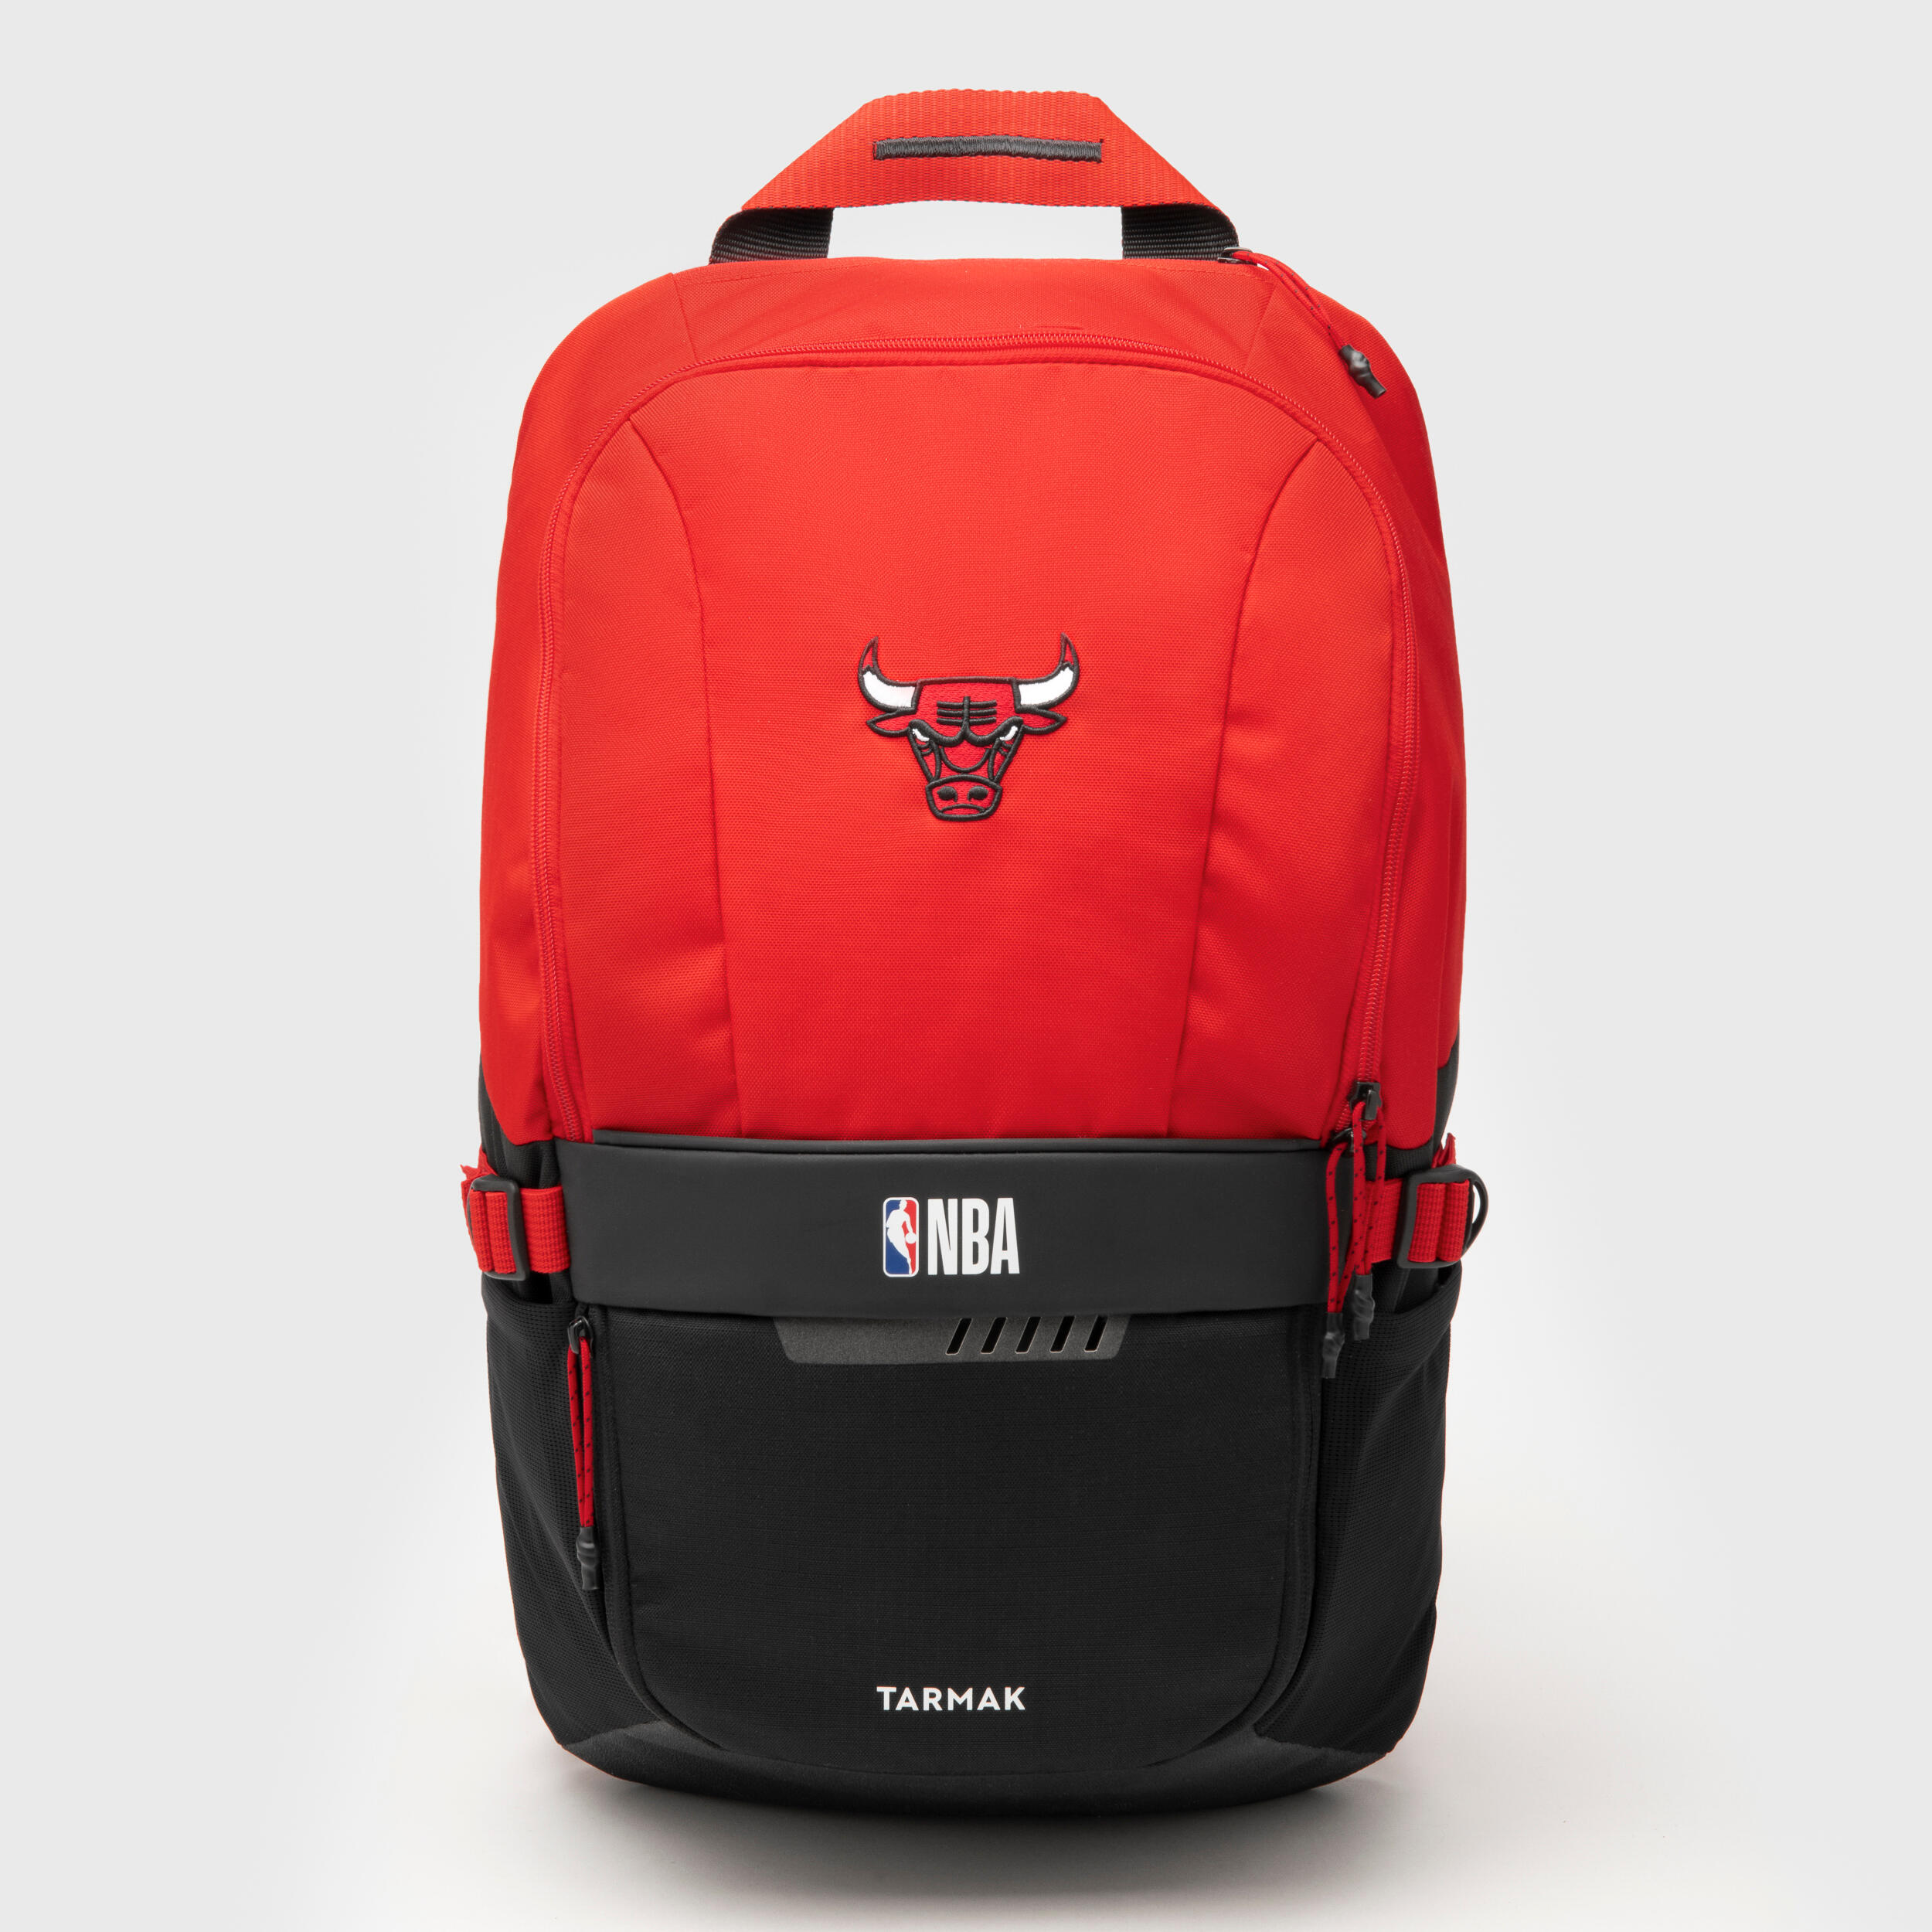 TARMAK Basketball Backpack 25 L - NBA Chicago Bulls